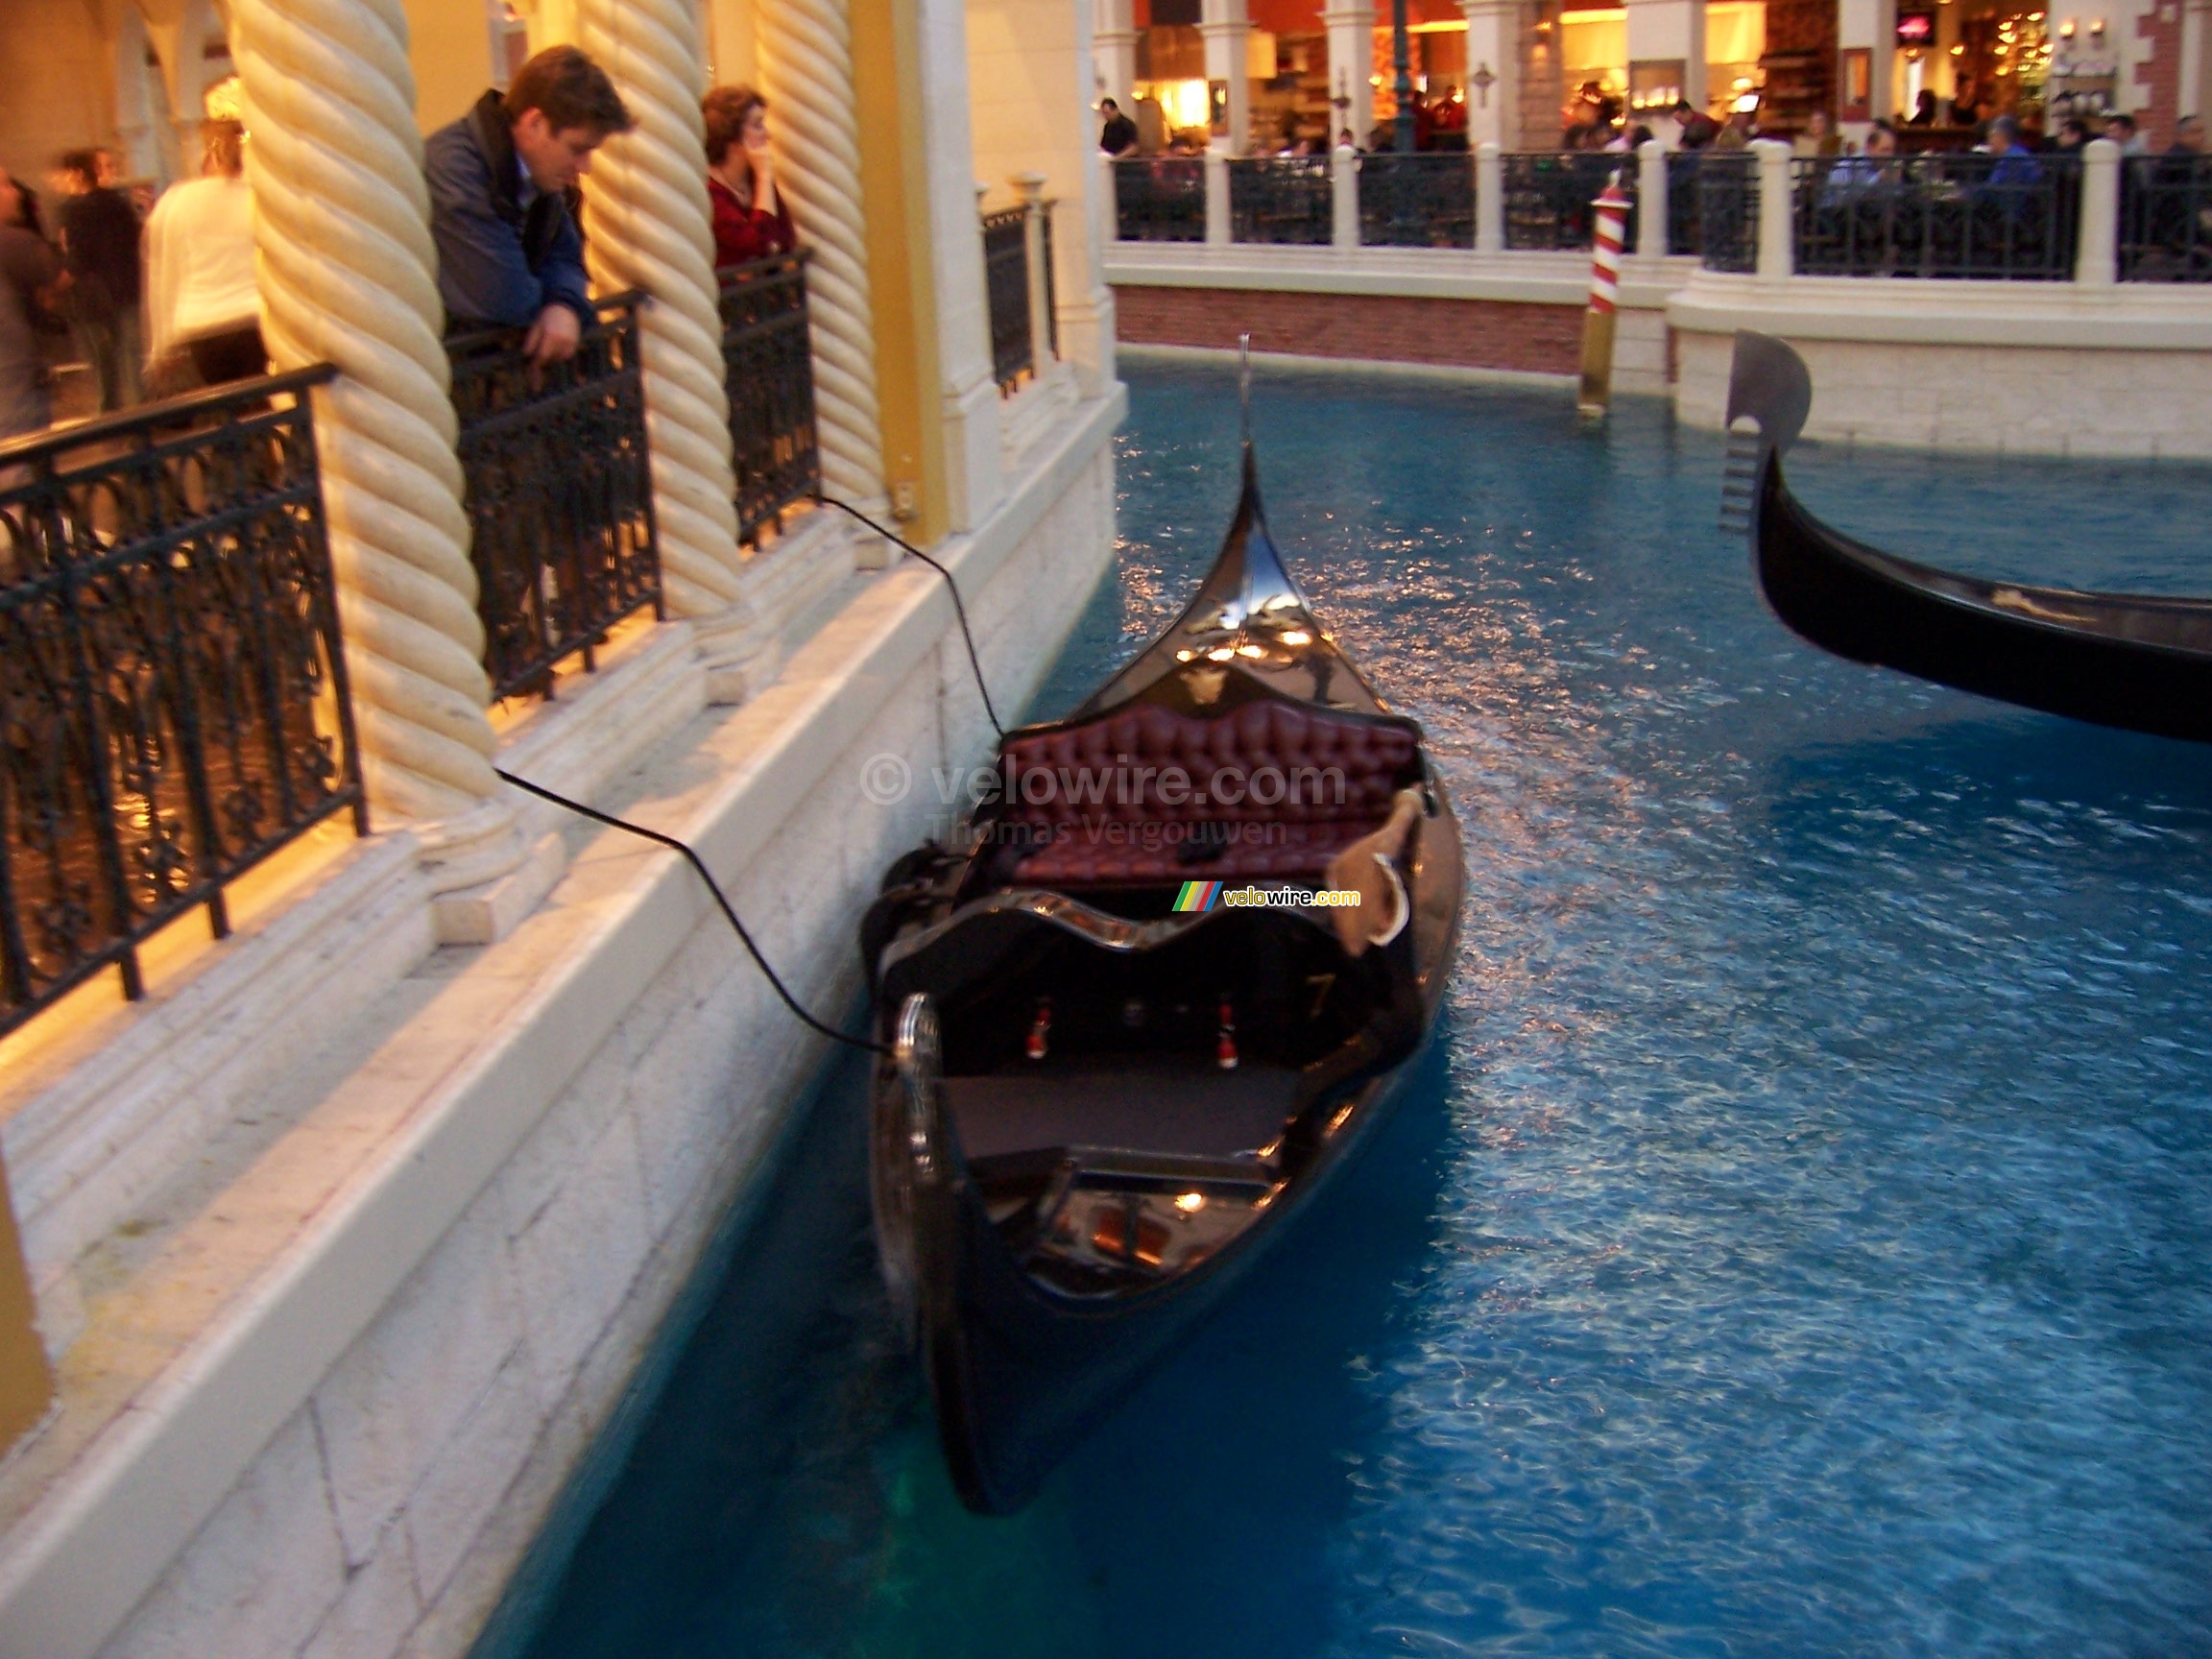 A gondola in the Venetian hotel